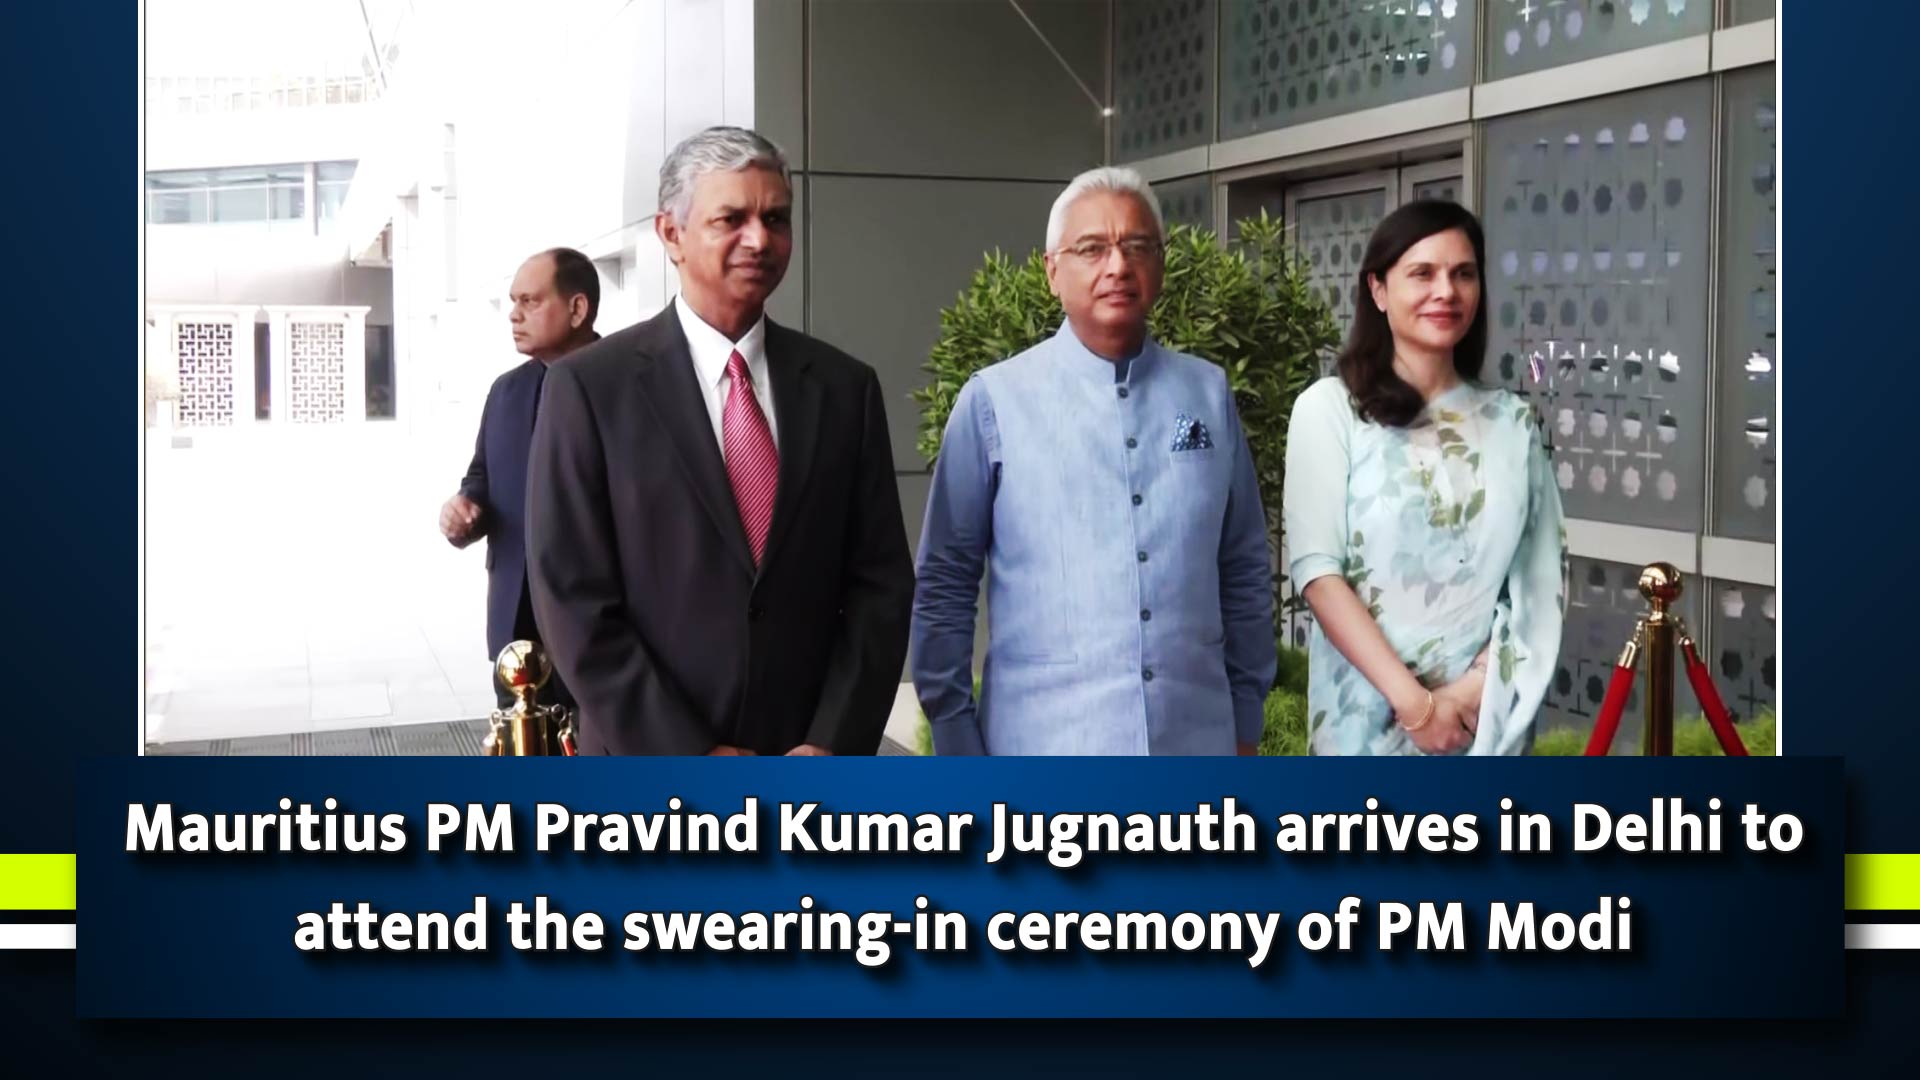 Mauritius PM Pravind Kumar Jugnauth arrives in Delhi to attend the swearing-in ceremony of PM Narendra Modi